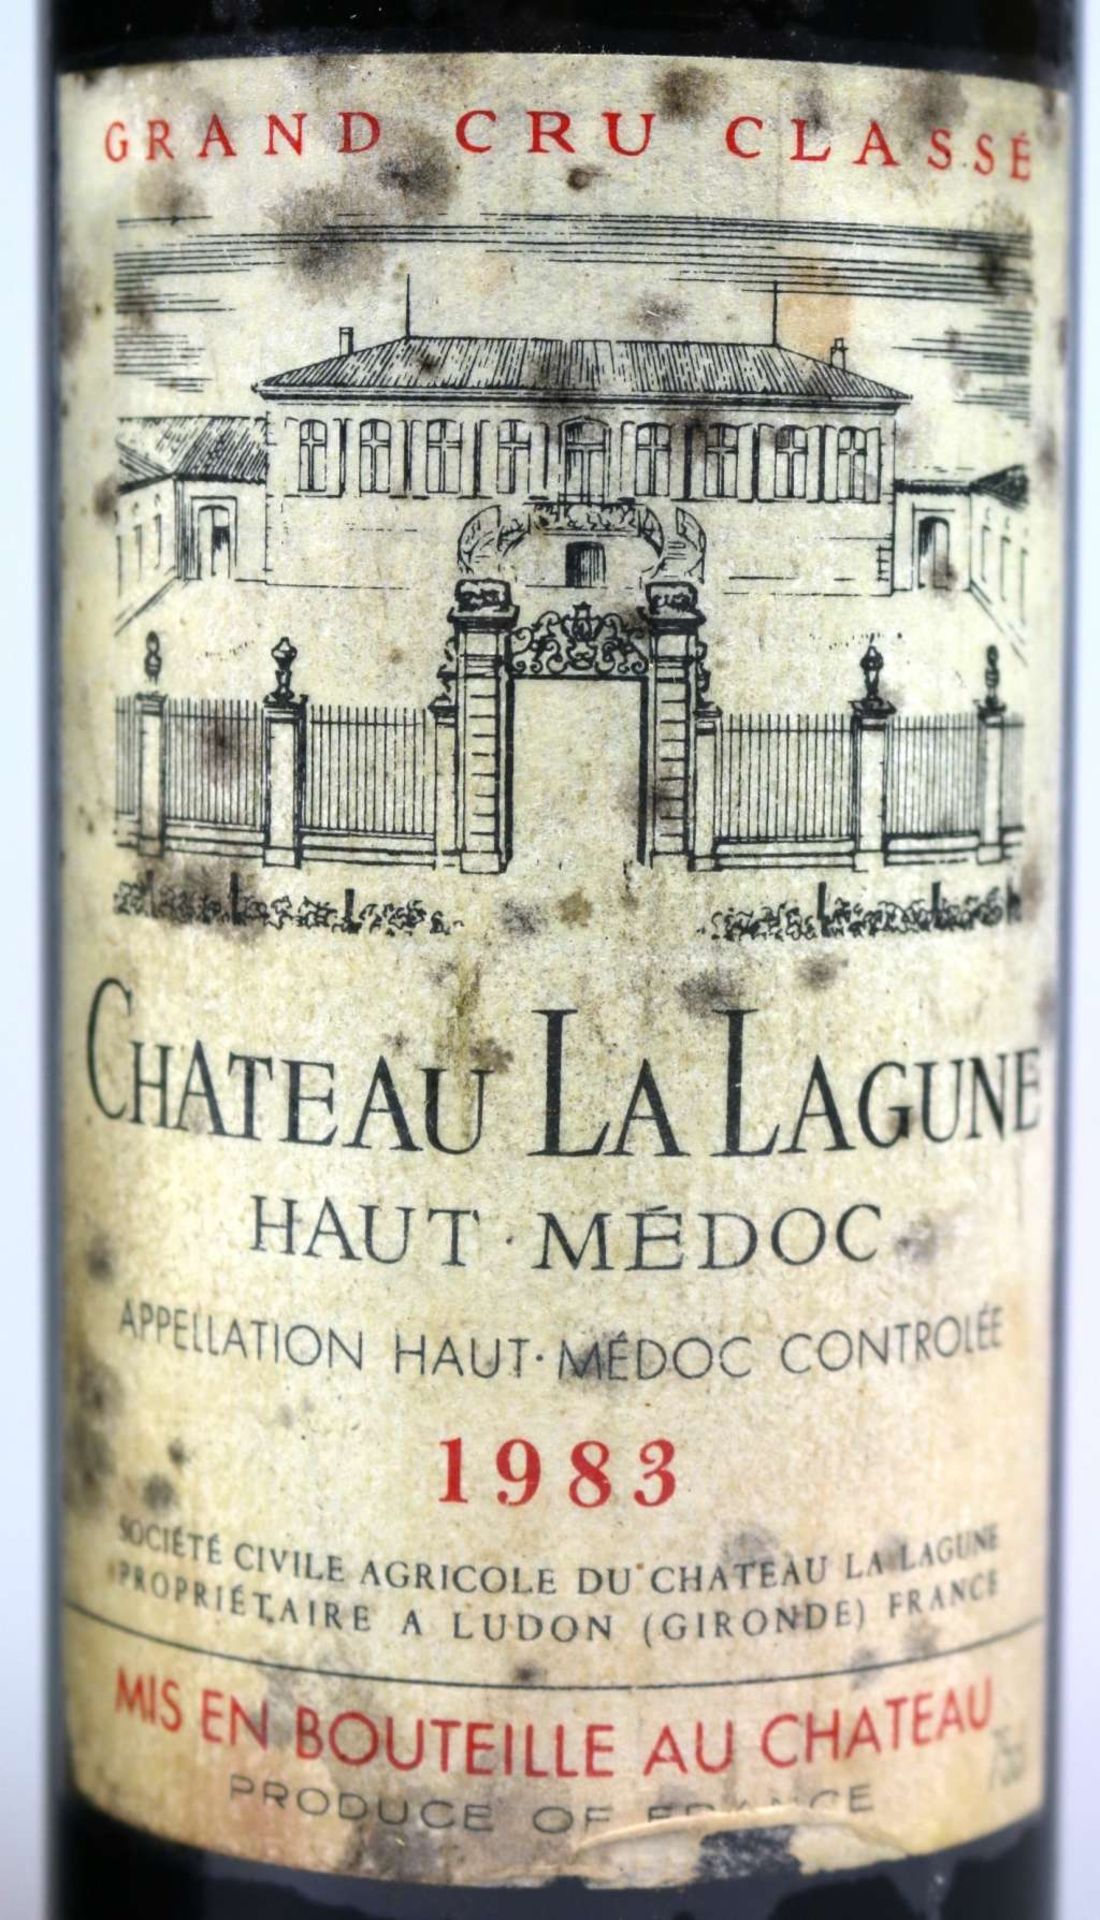 Château Lafitte und Chauteau La Lagune - Image 3 of 5